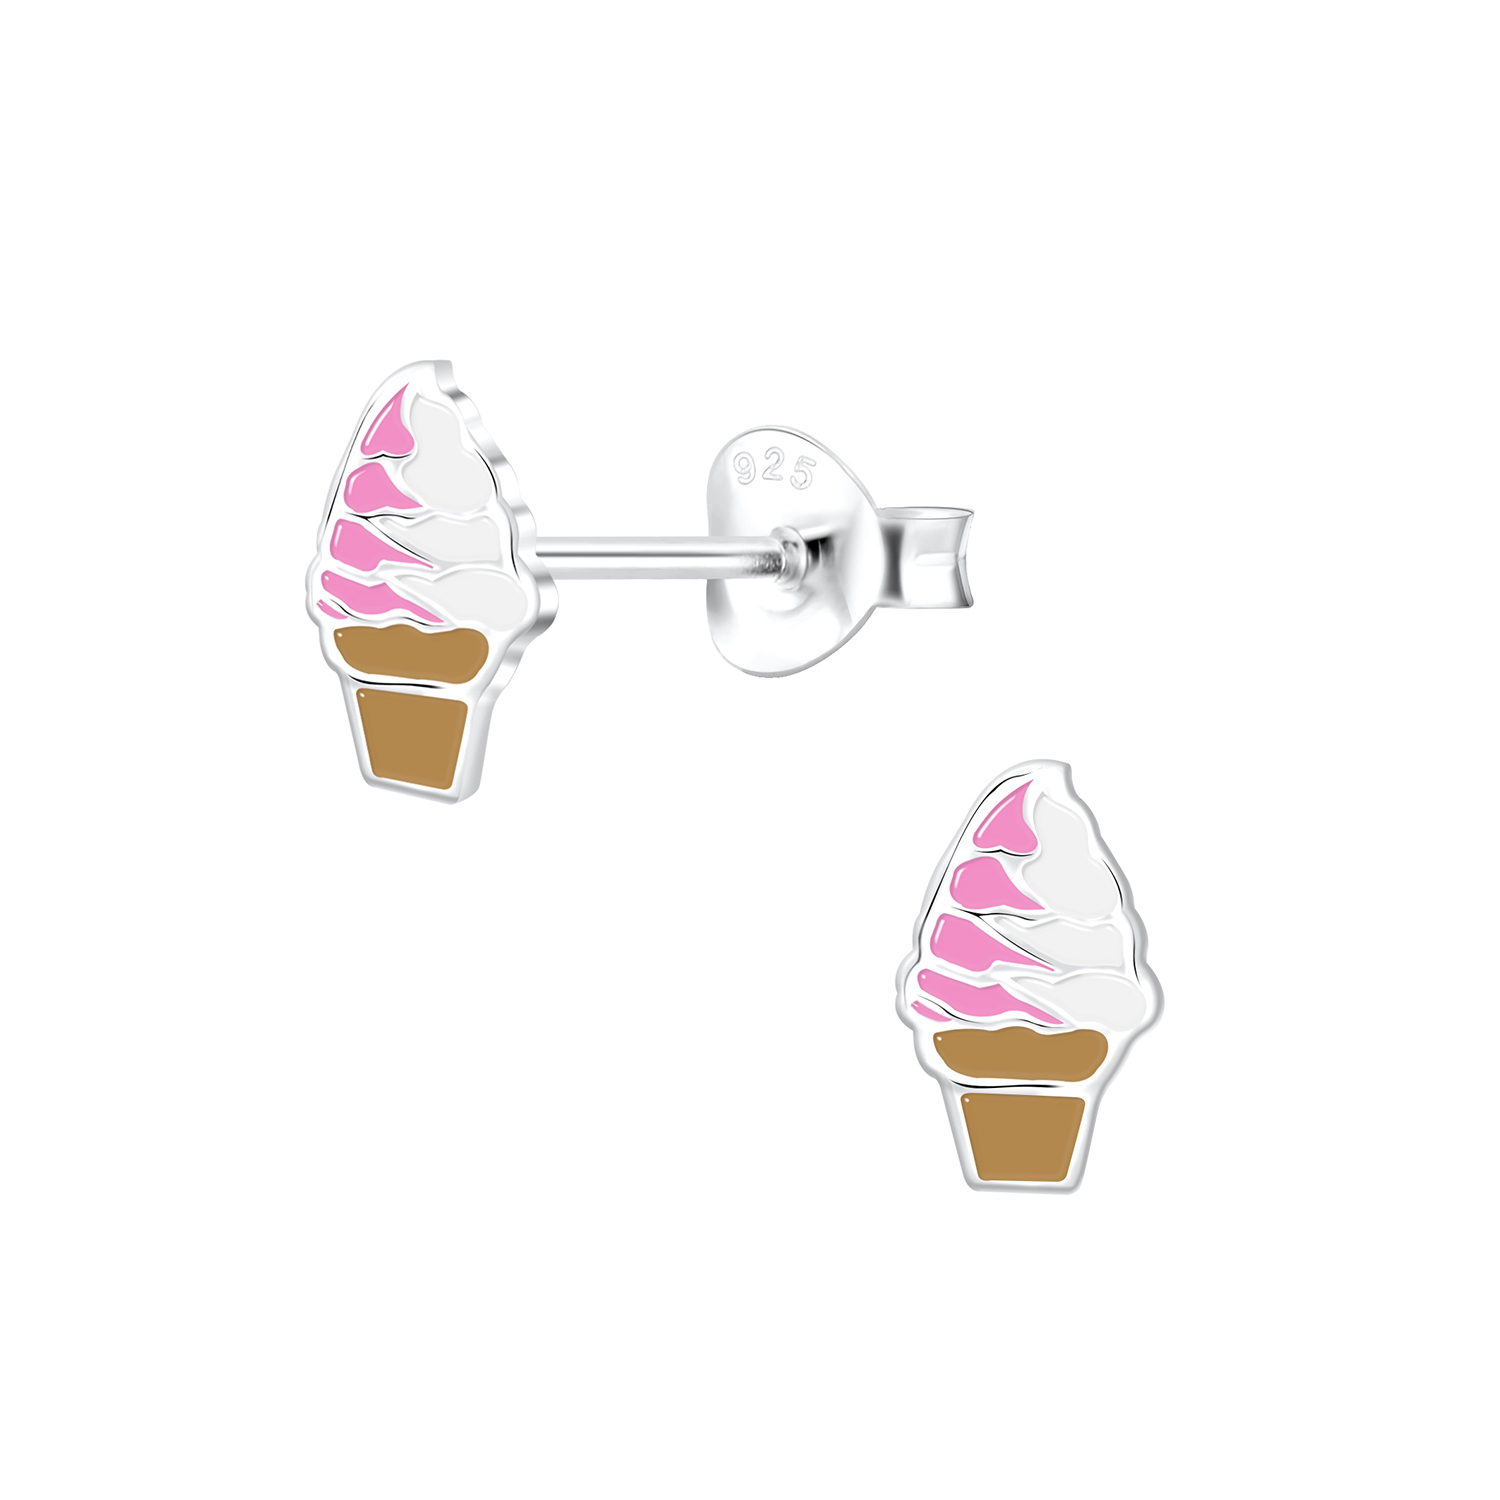 strawberry and vanilla ice cream cone stud earrings